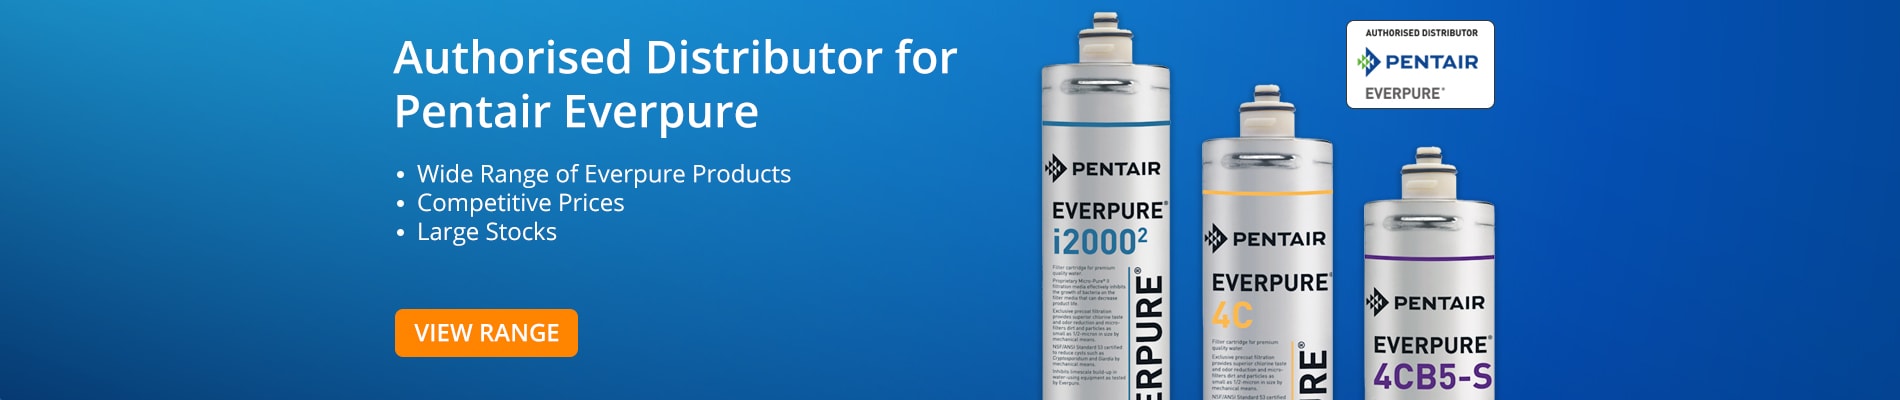 Authorised Distributor for Pentair Everpure